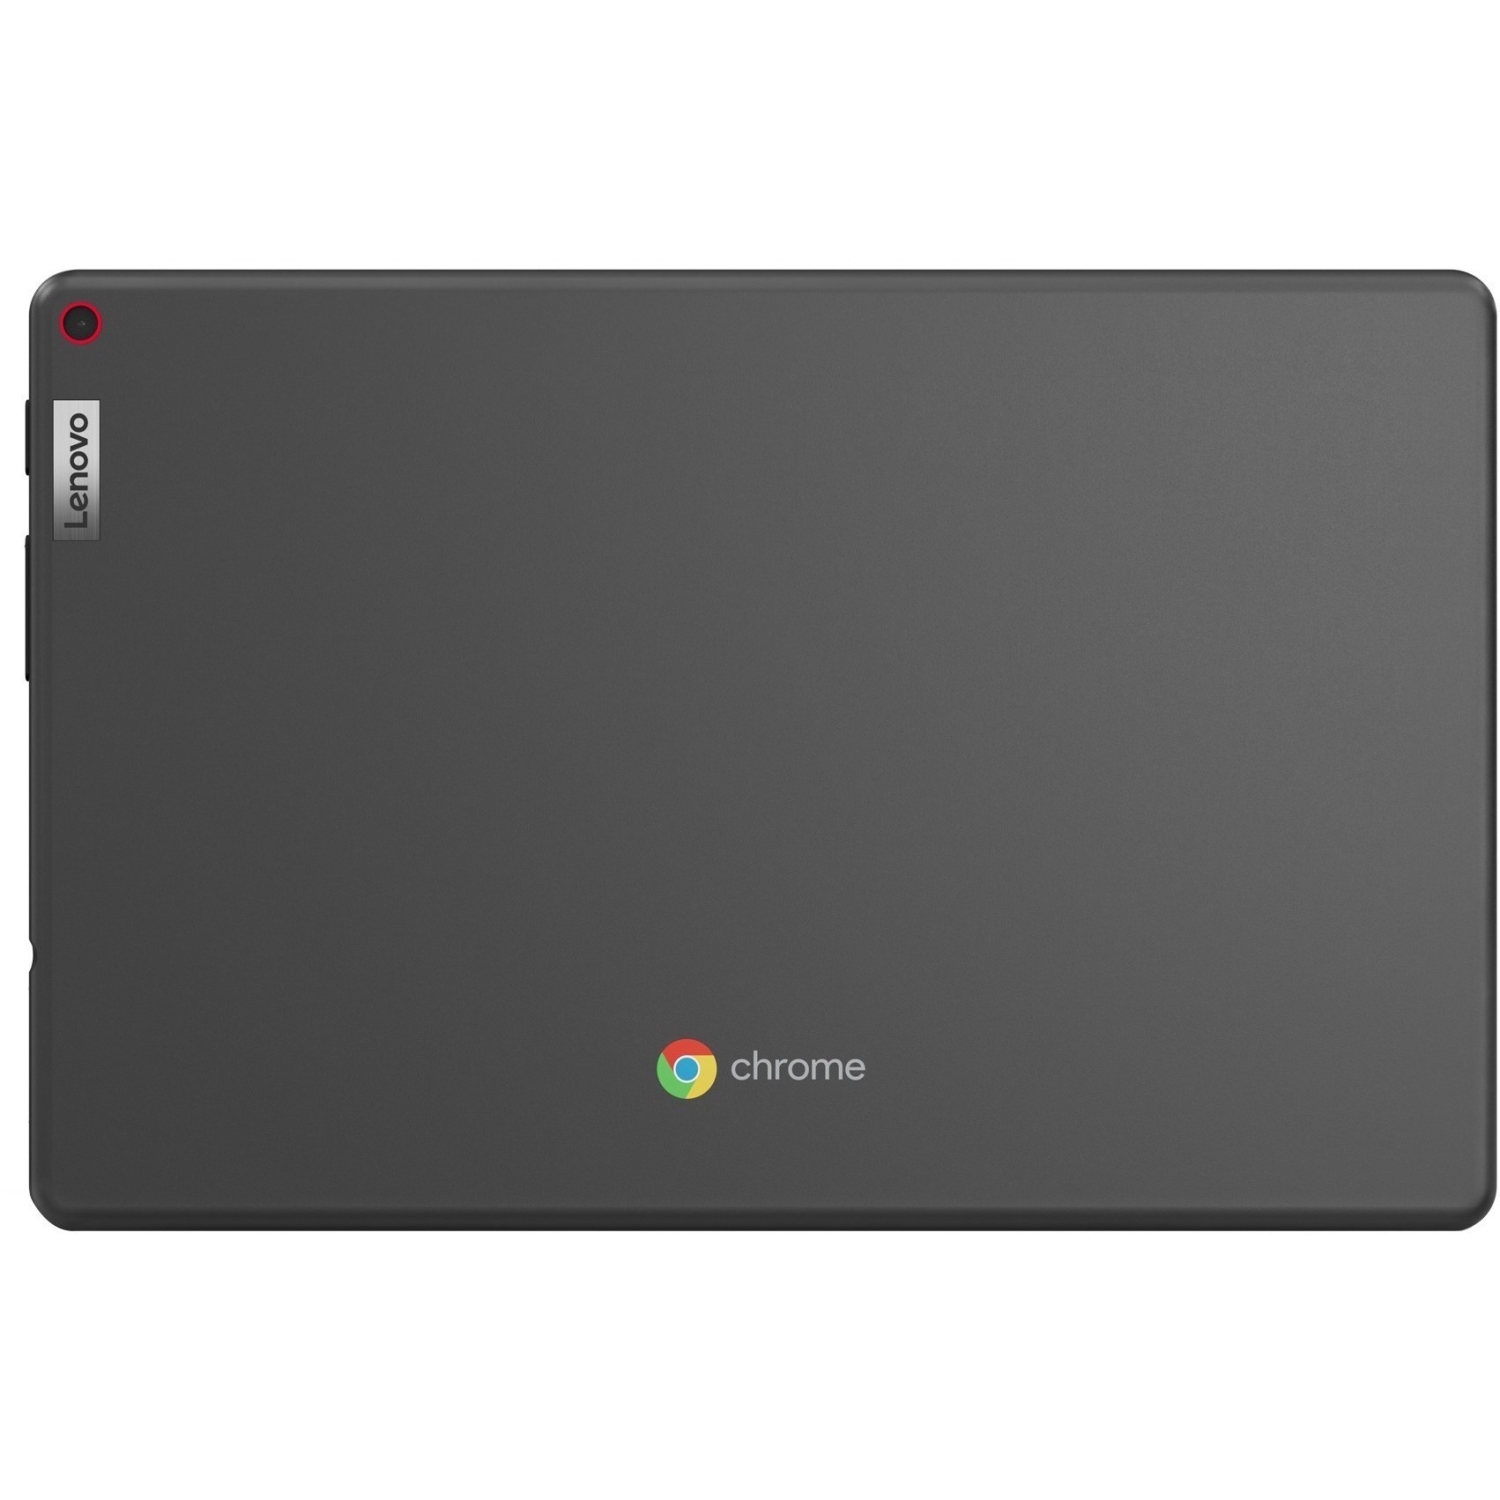 Refurbished (Good) Lenovo 10e 82AM0009US Chromebook Tablet - 10.1" WUXGA - MediaTek Cortex A73 MT8183 Quad-core (4 Core) 2 GHz - 4 GB RAM - 32 GB Storage - Chrome OS - Iron Gray